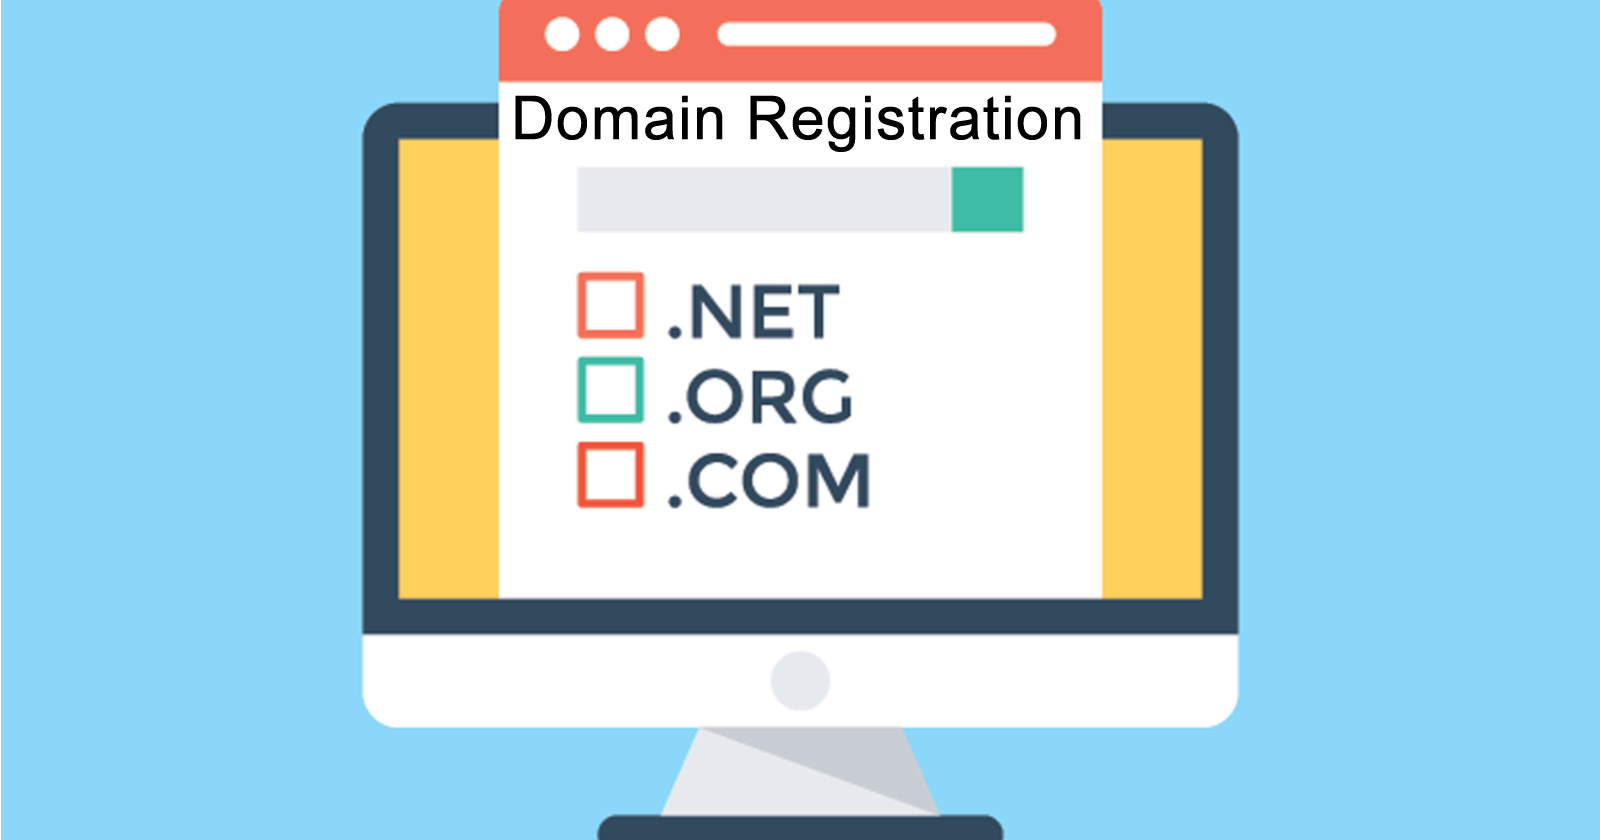 domainregistration.png